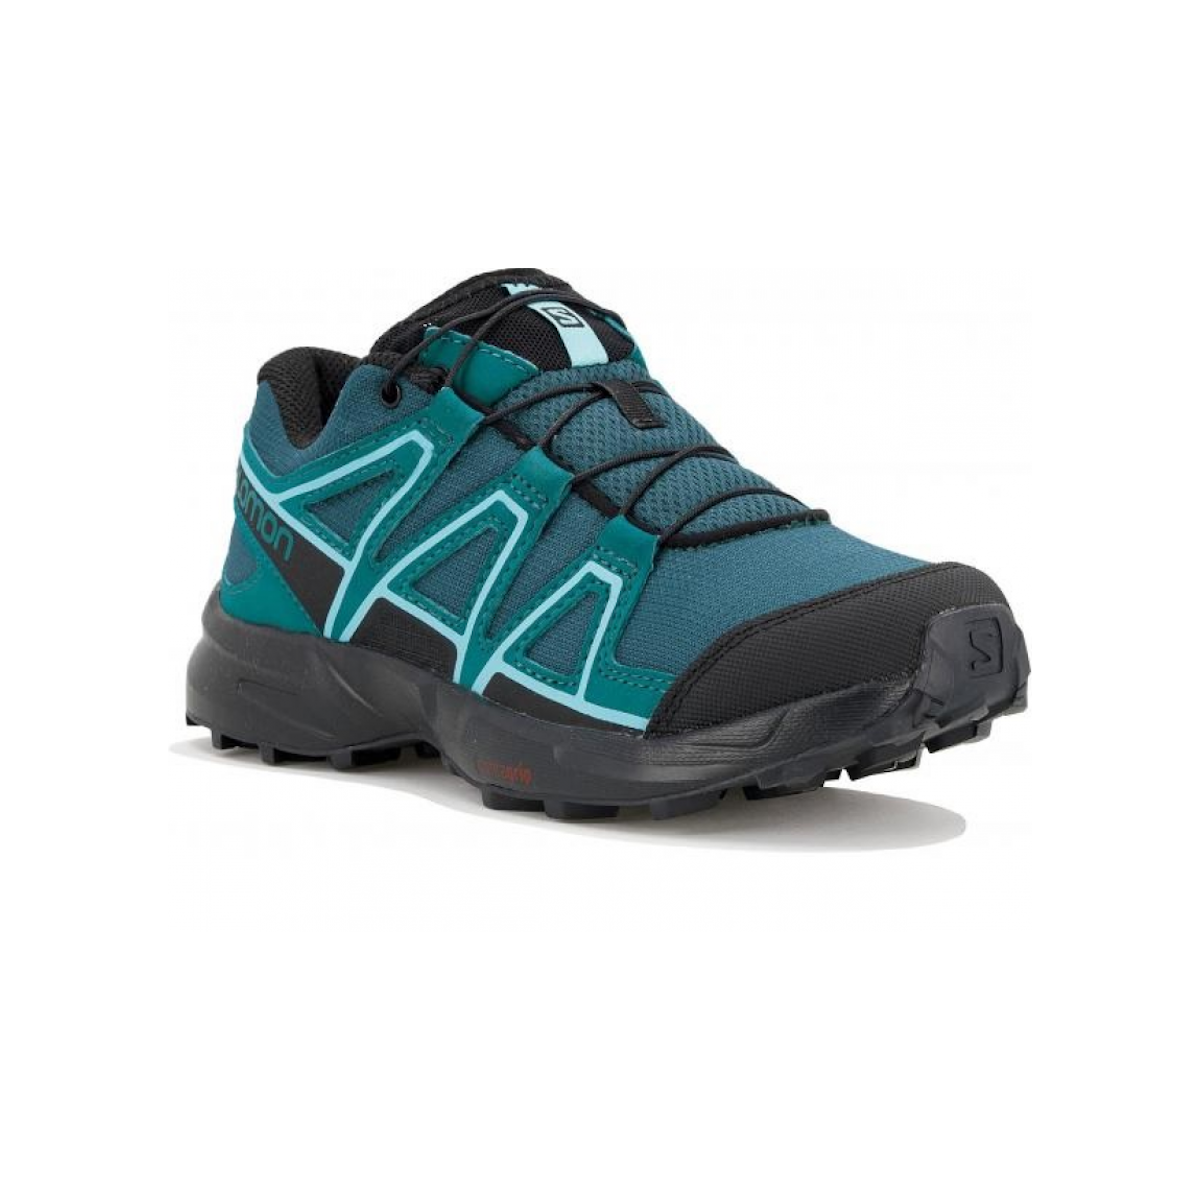 SALOMON SPEEDCROSS J trail running shoes - blue/black